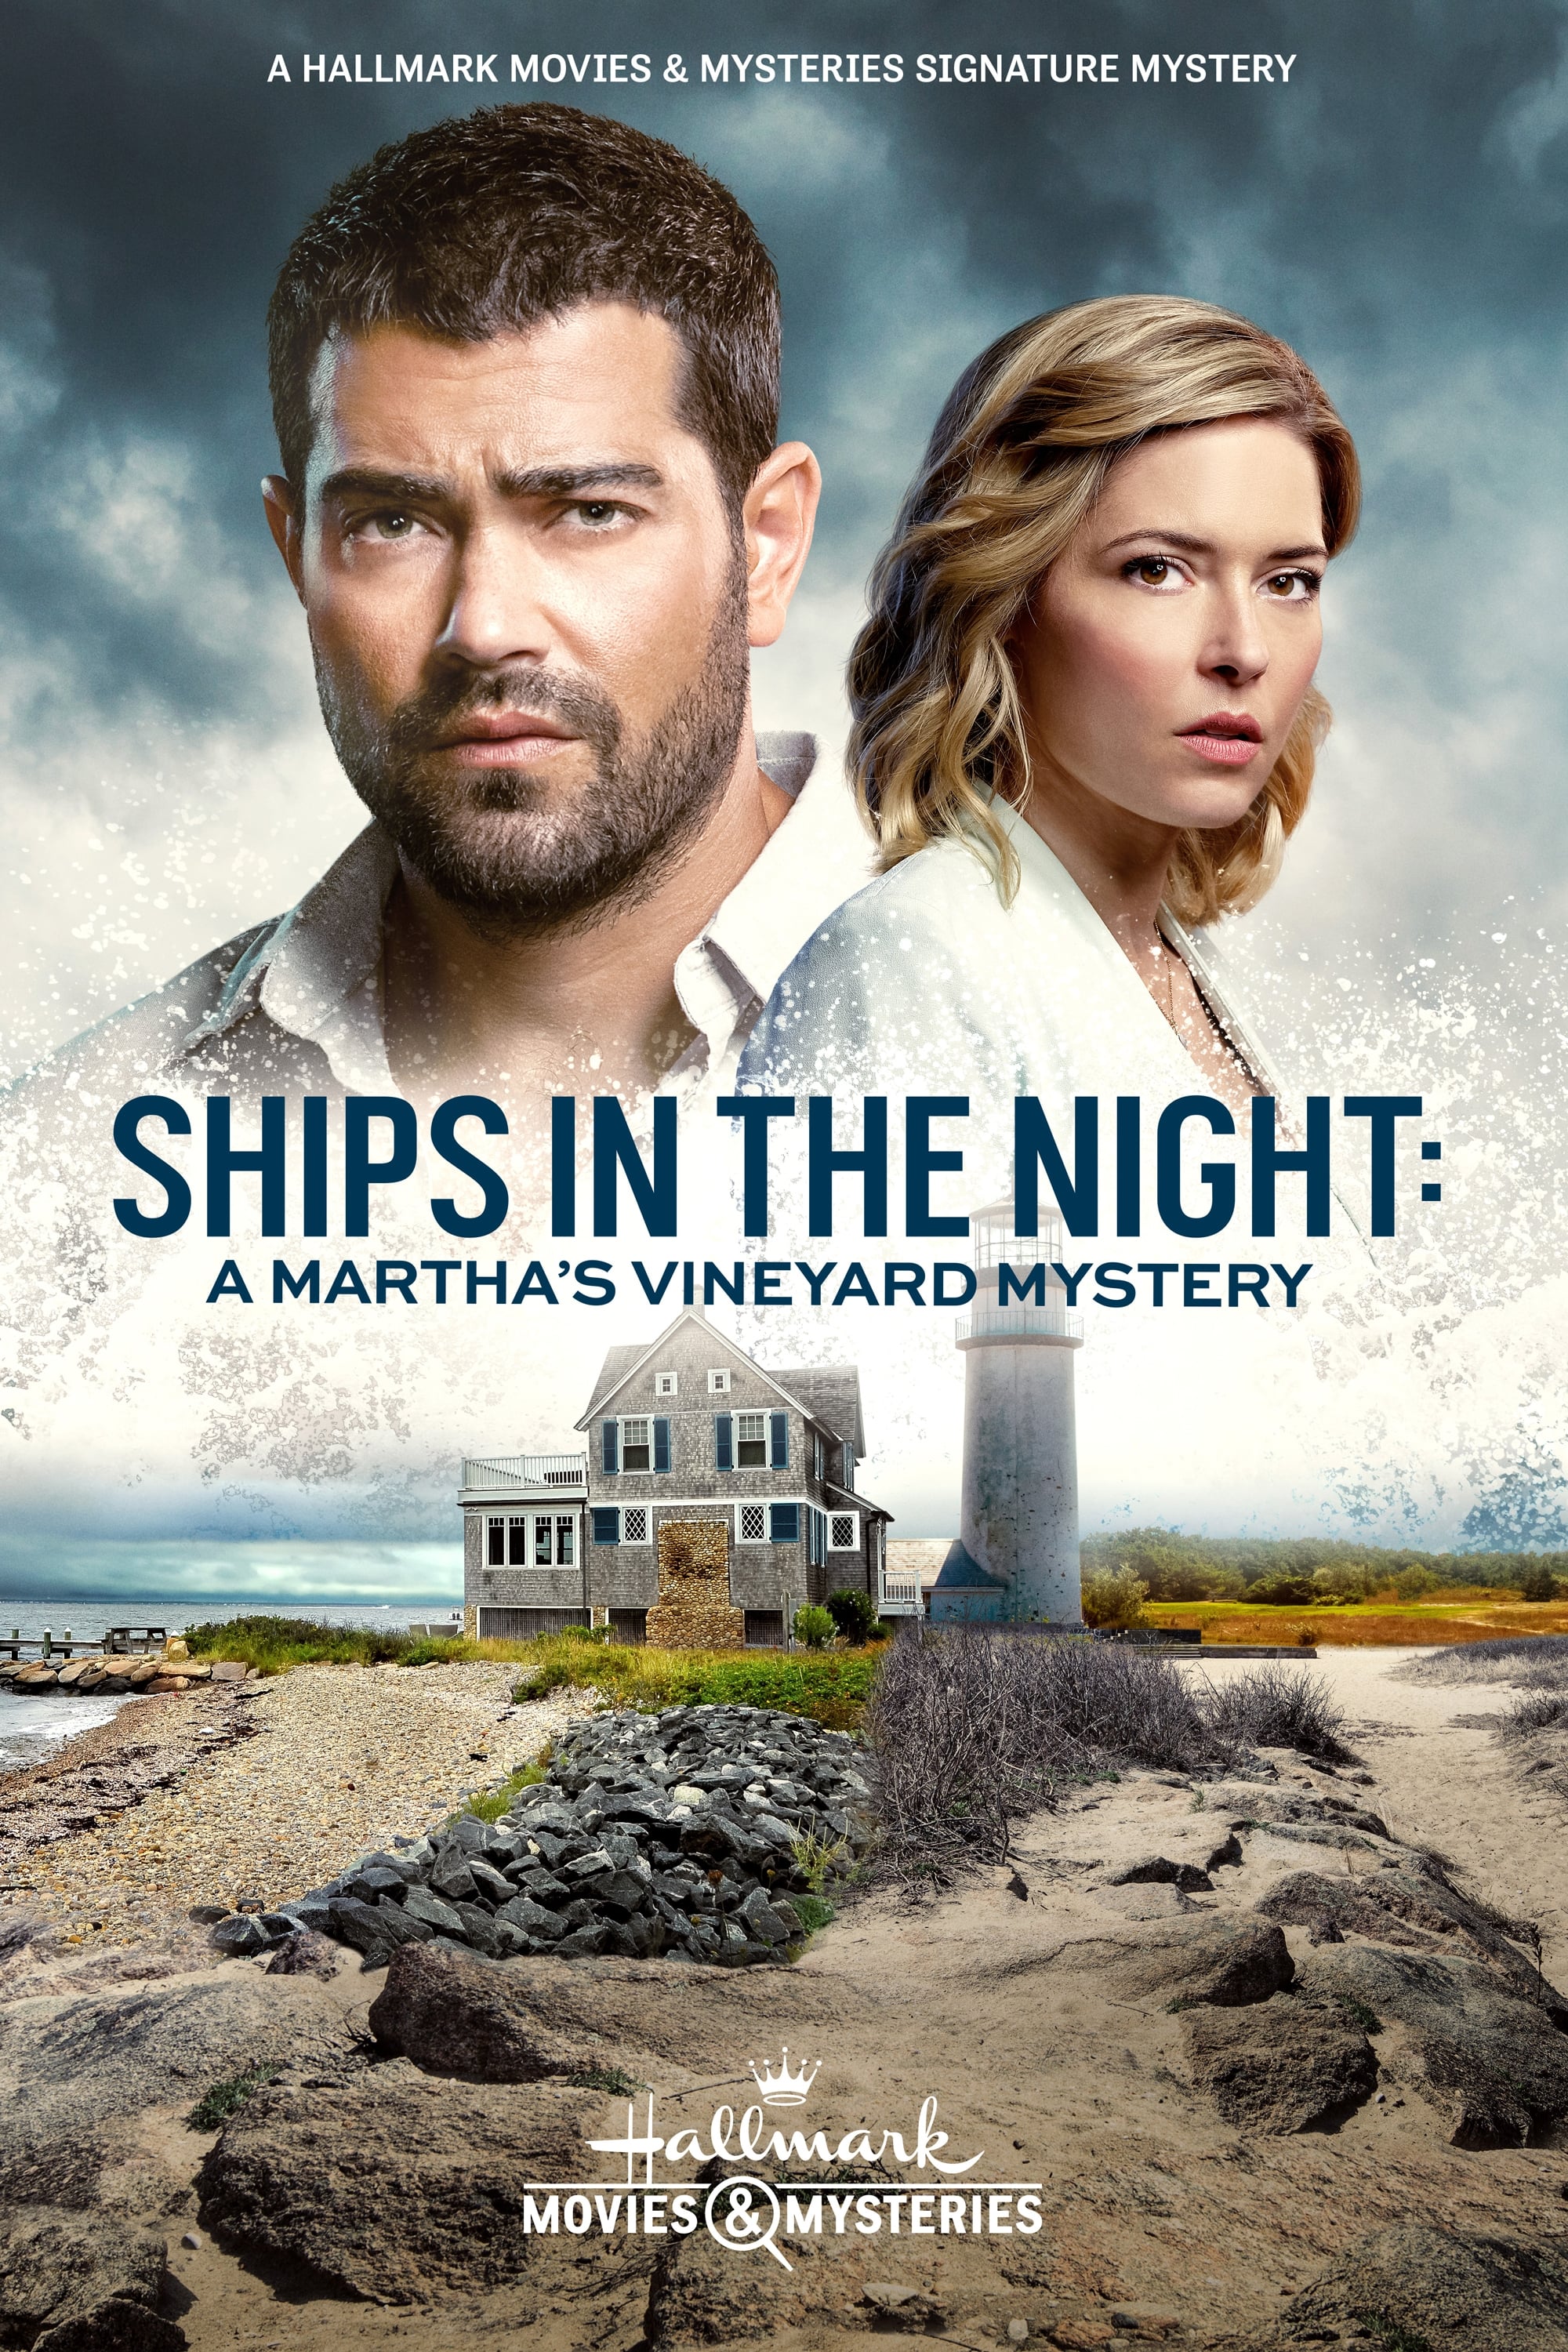 EN - Ships In the Night: A Martha's Vineyard Mystery (2021) Hallmark